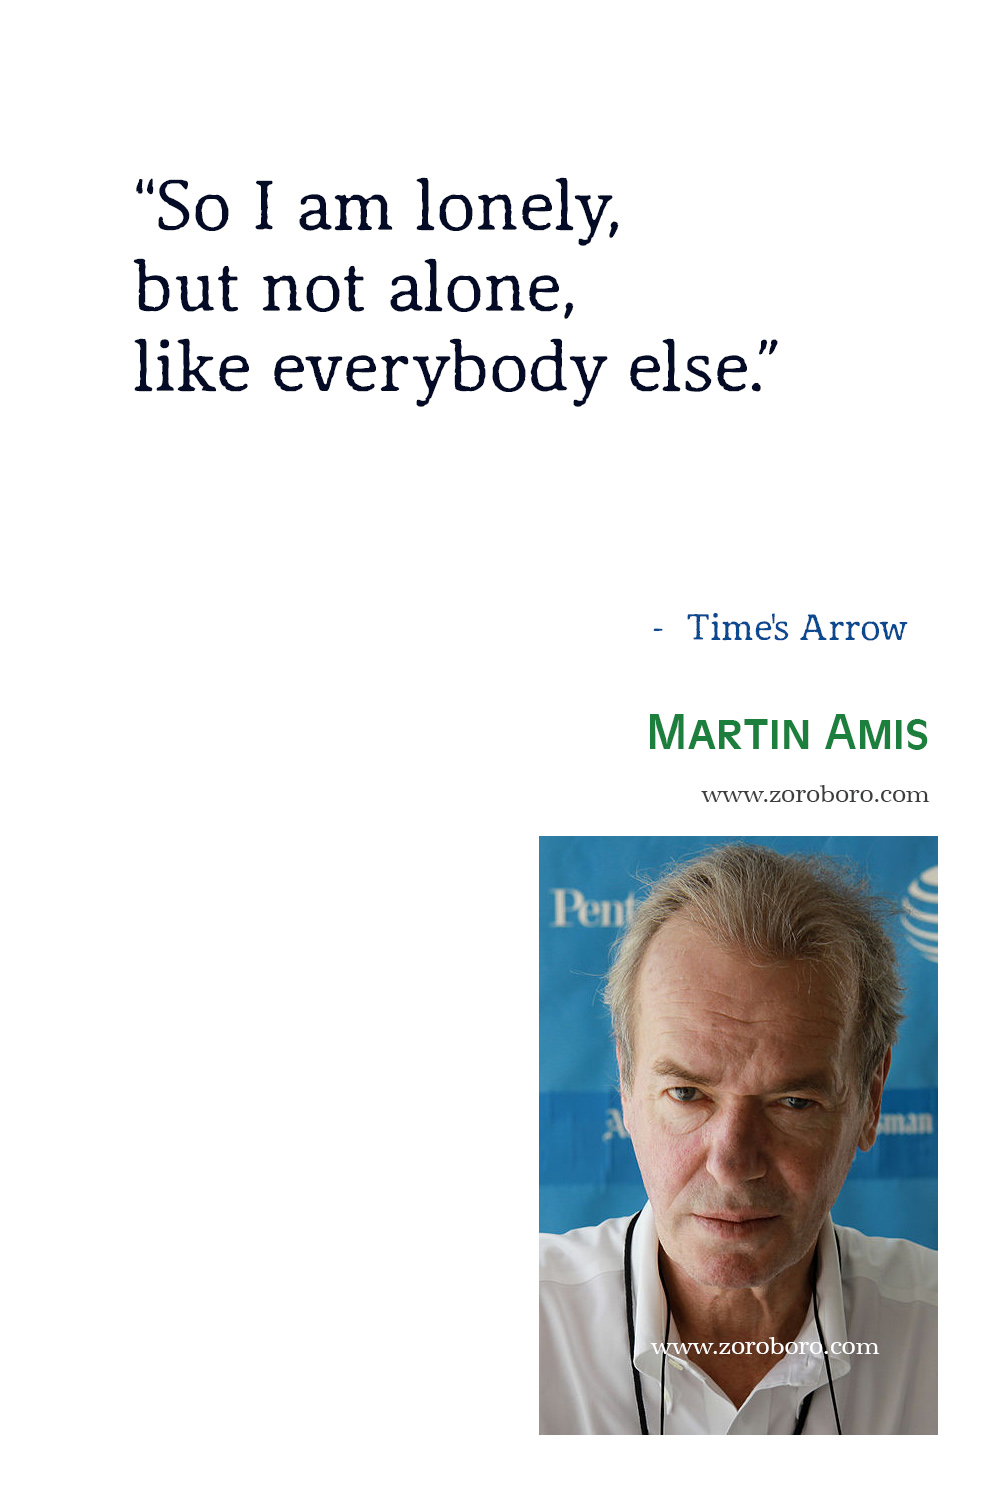 Martin Amis Quotes, Martin Amis Books, Martin Amis London Fields, Money, Time's Arrow & House of Meetings Quotes. Martin Amis Quotes